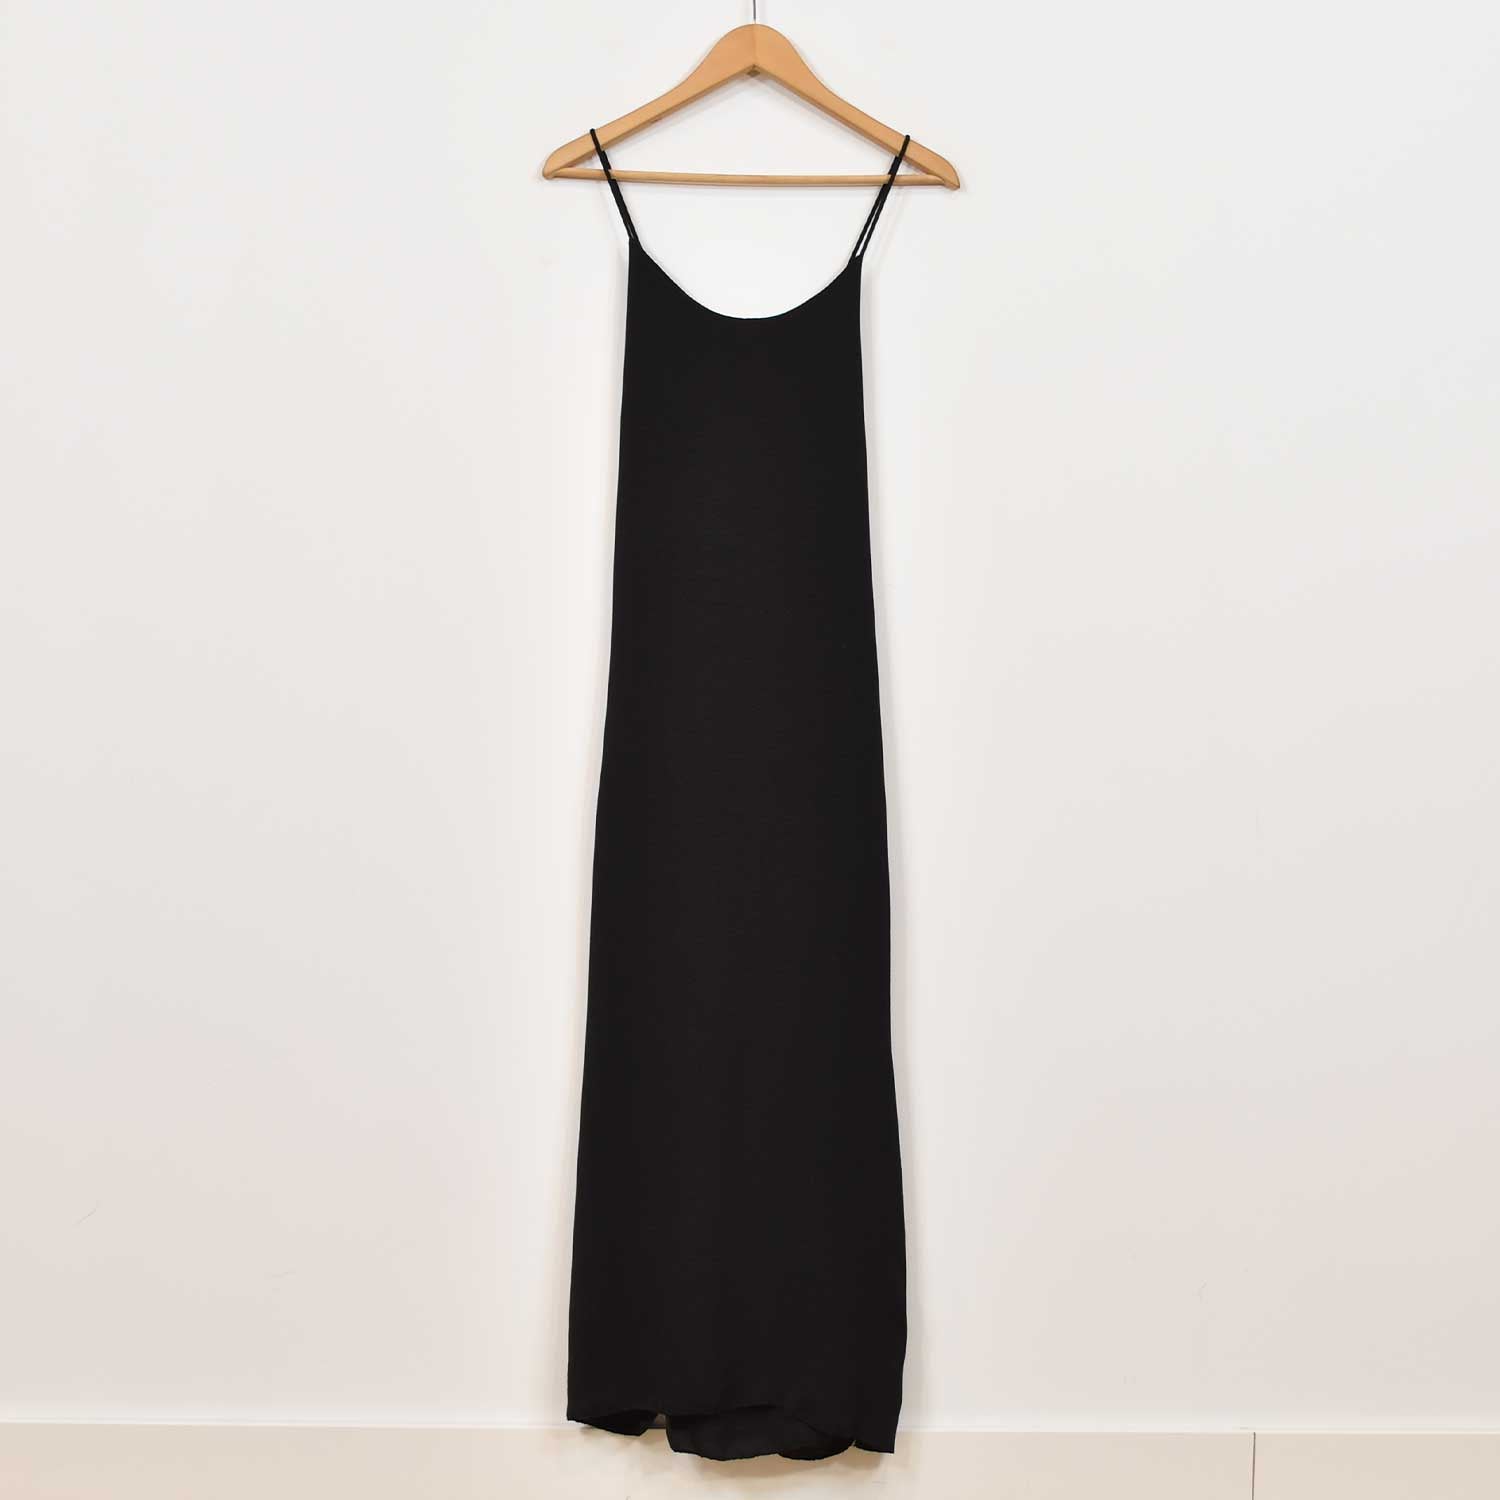 Black cross strapless dress